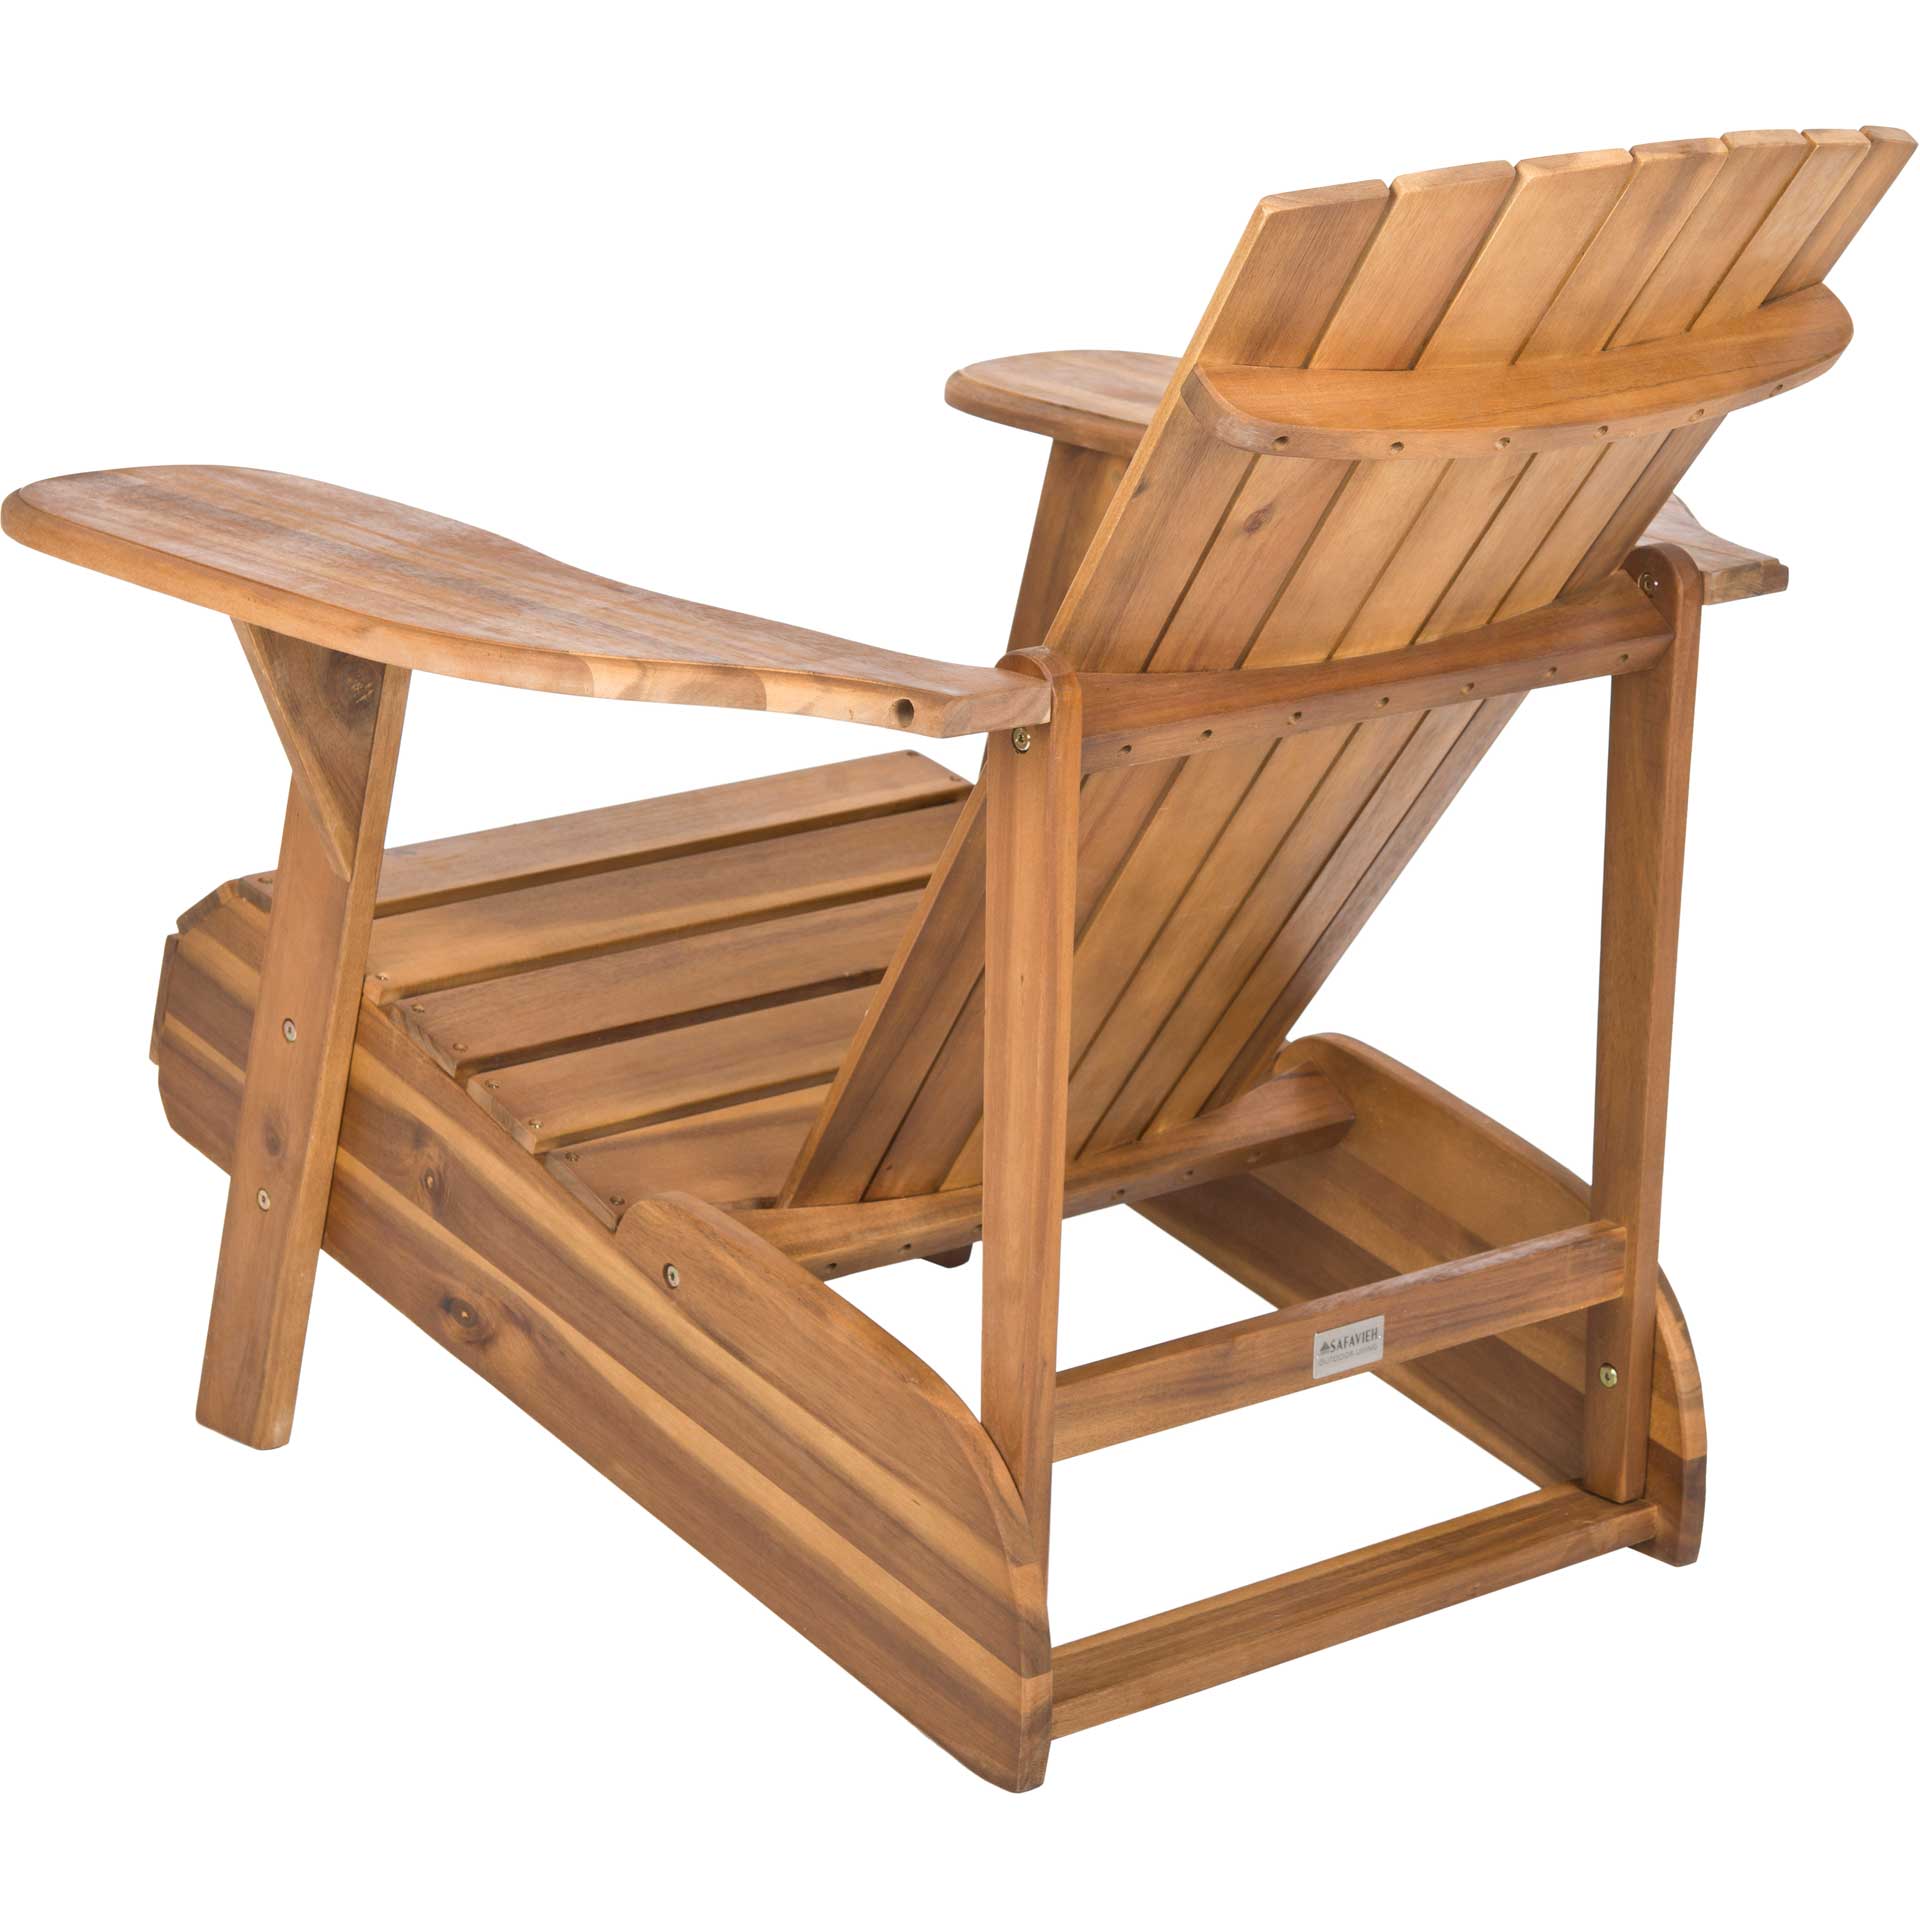 Montrelle Acacia Chair Natural